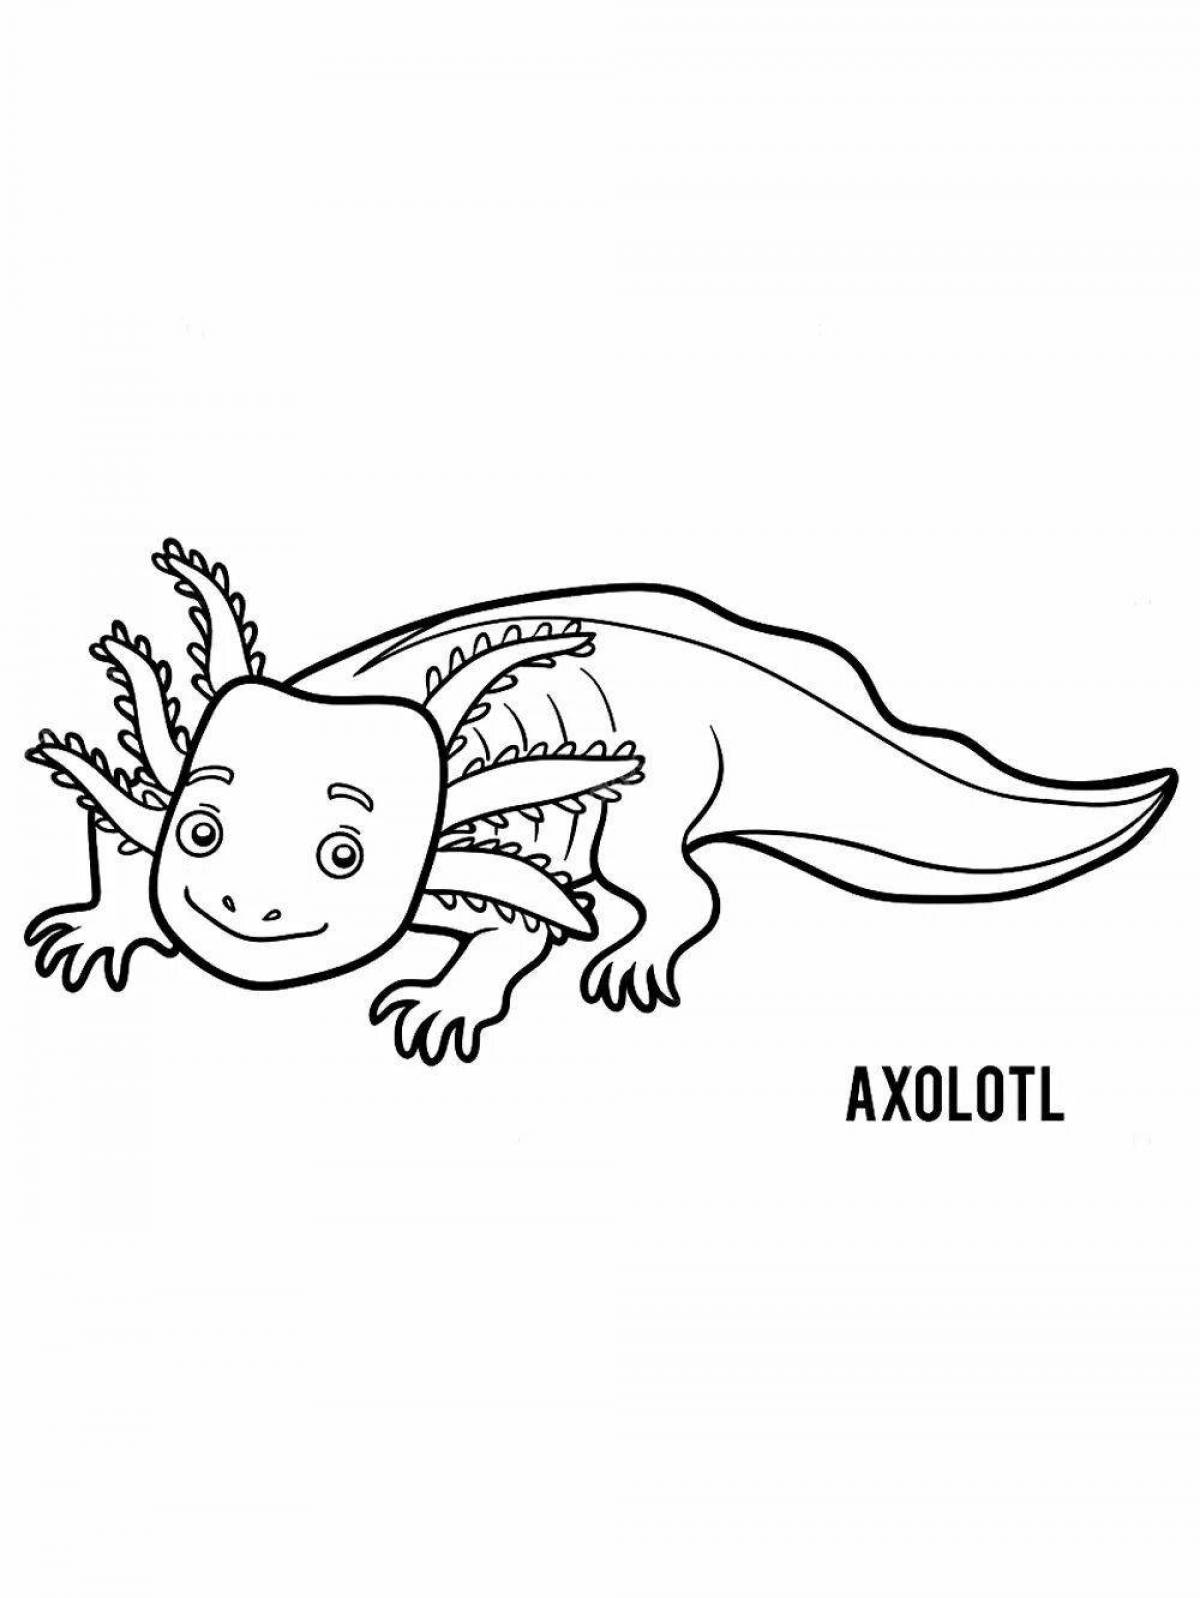 Dazzling axolotl minecraft coloring book